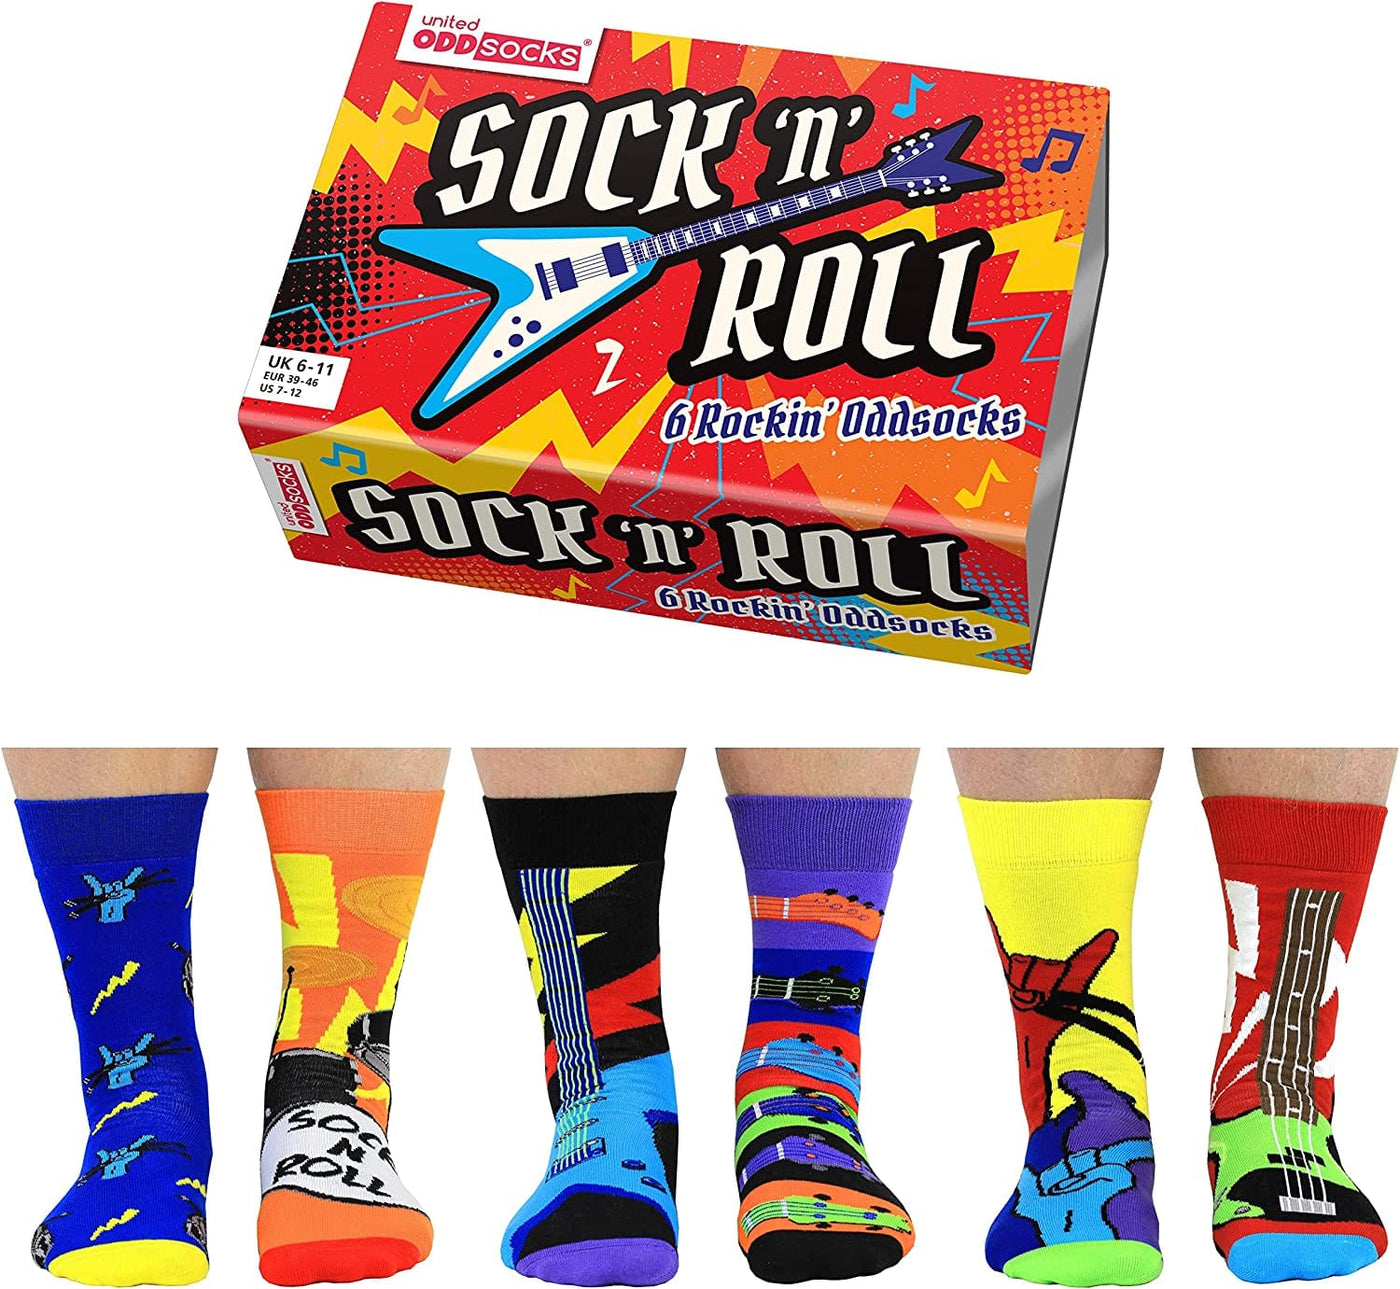 United Odd Socks Socks Sock n Roll Rockstar Mens Socks